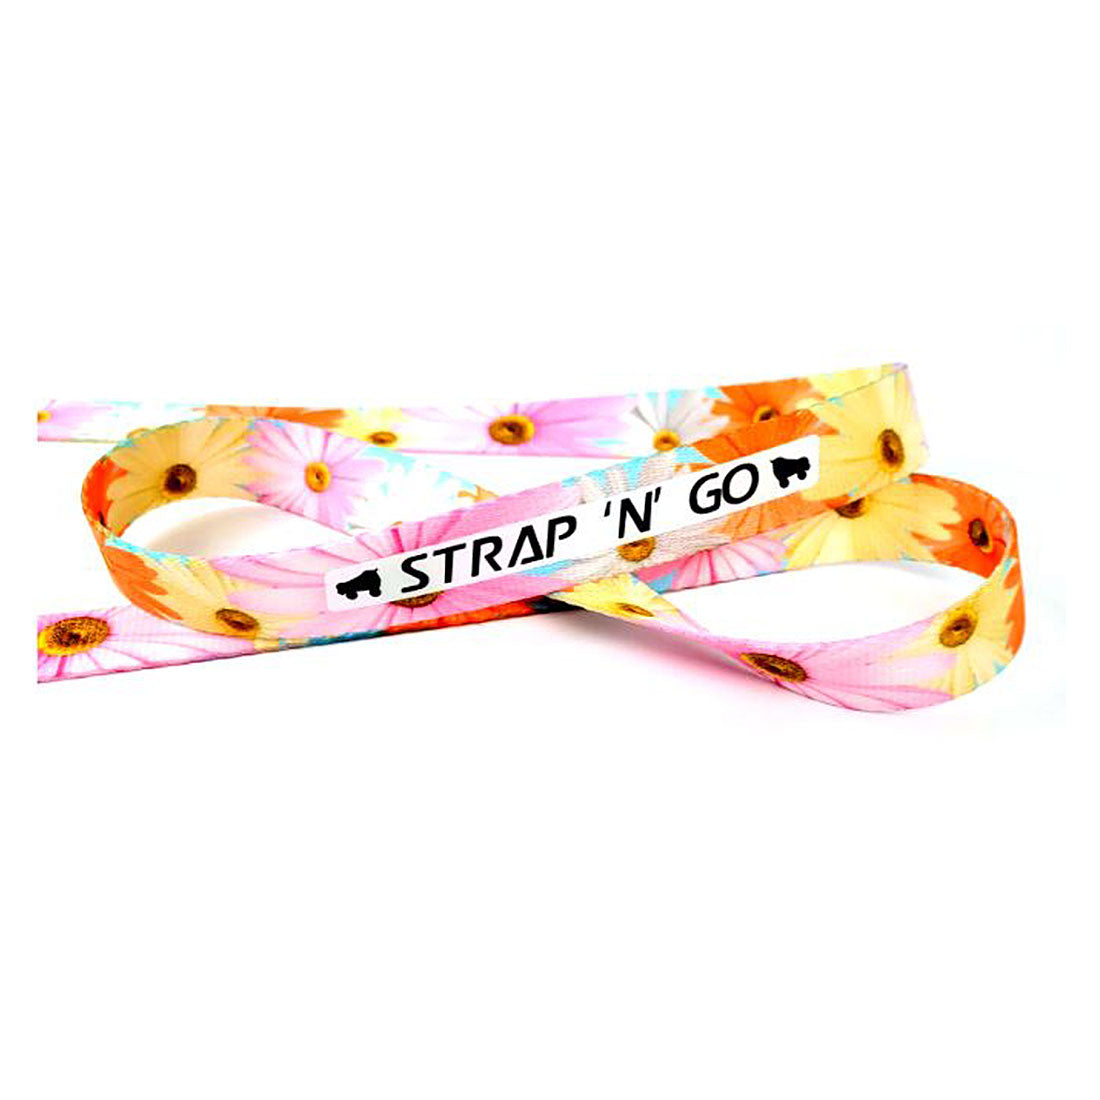 Strap N Go Skate Noose/Leash - Patterns Daisy Roller Skate Accessories